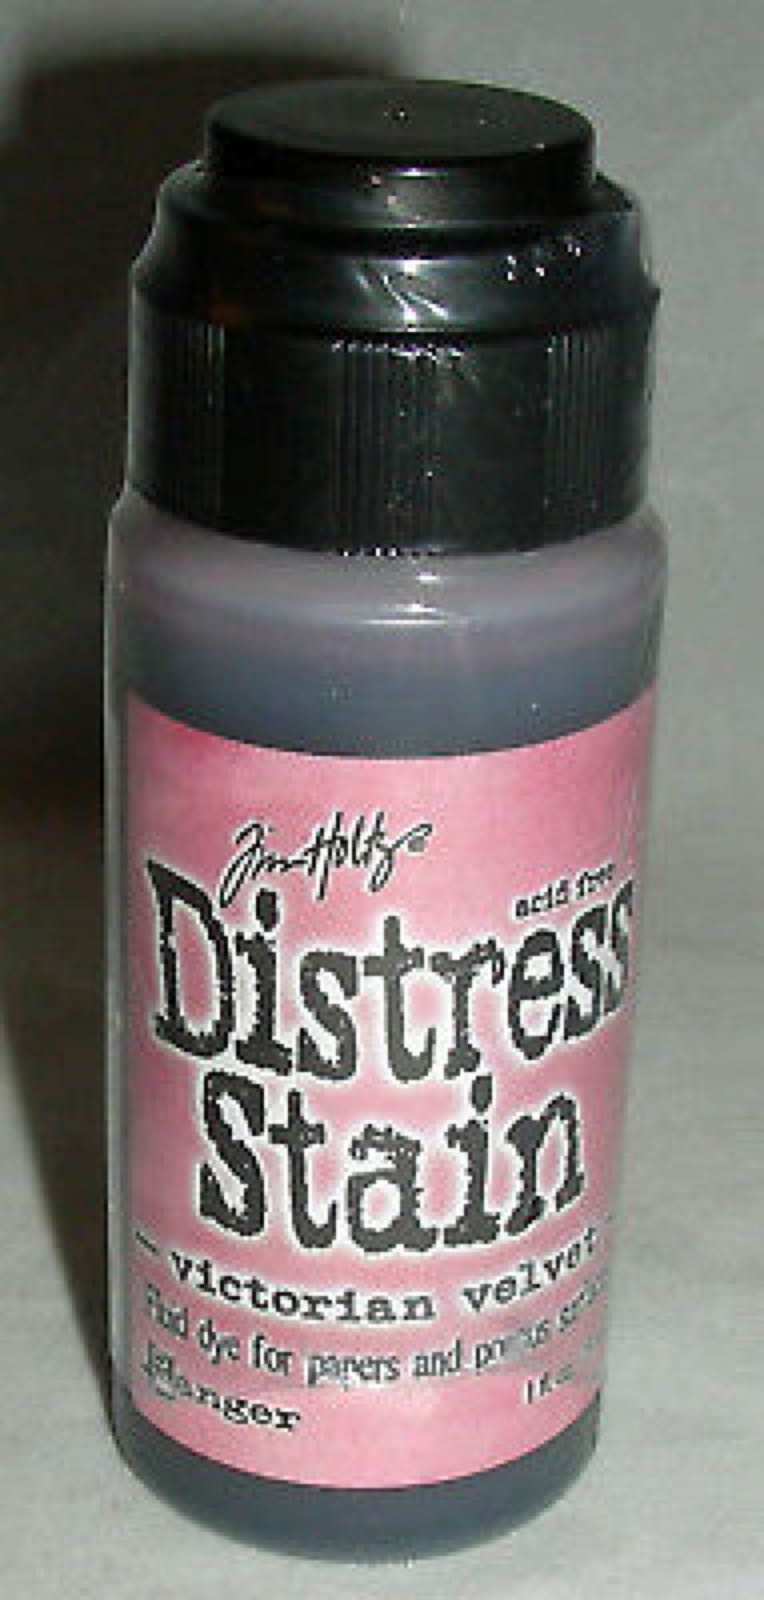 Distress stain Victorian velvet